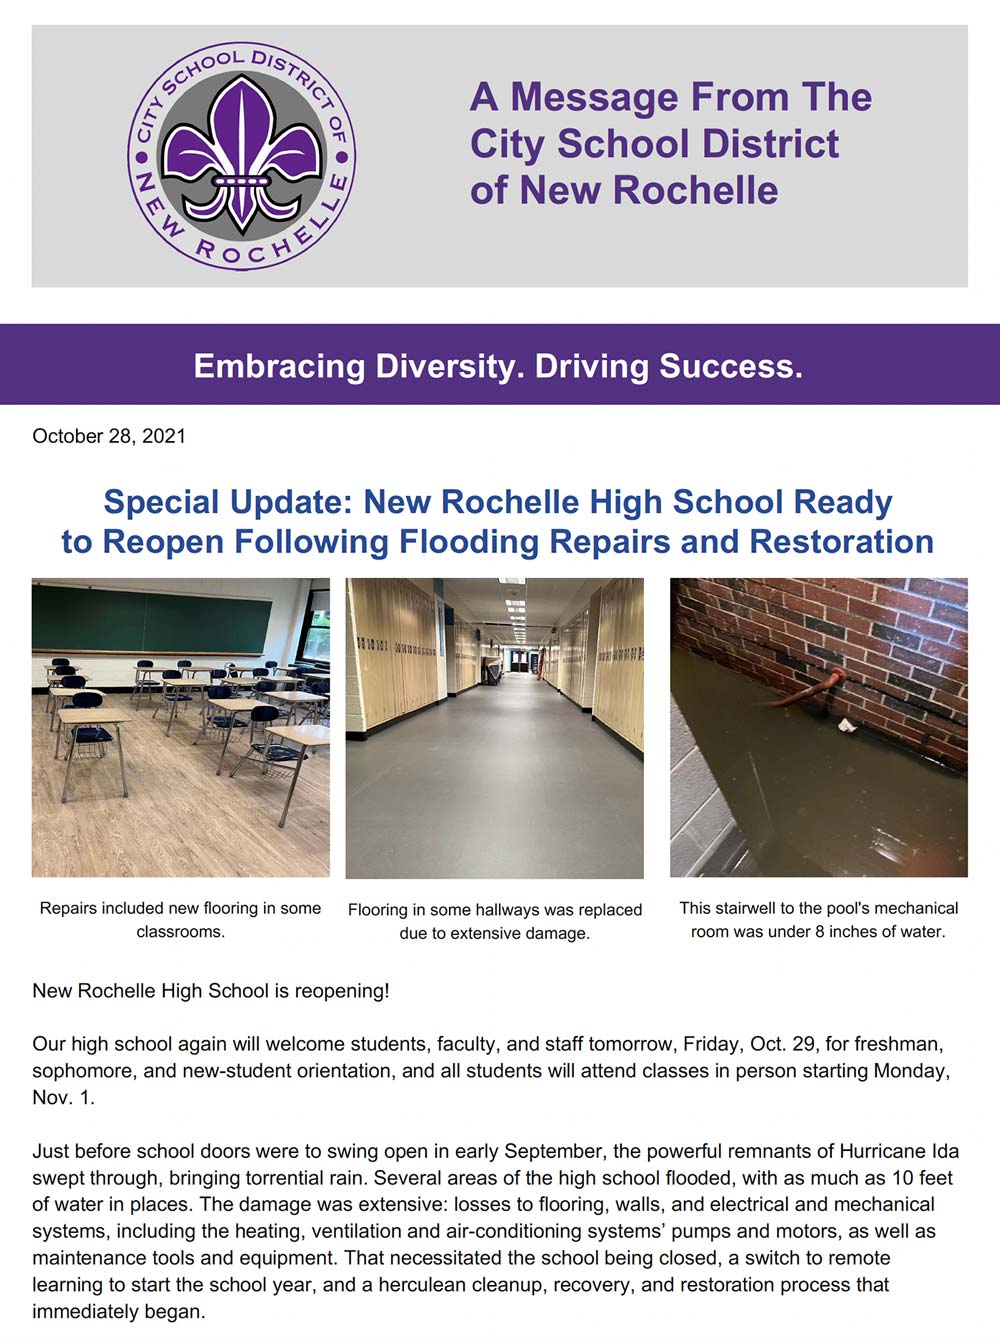 CSD New Rochelle Communications